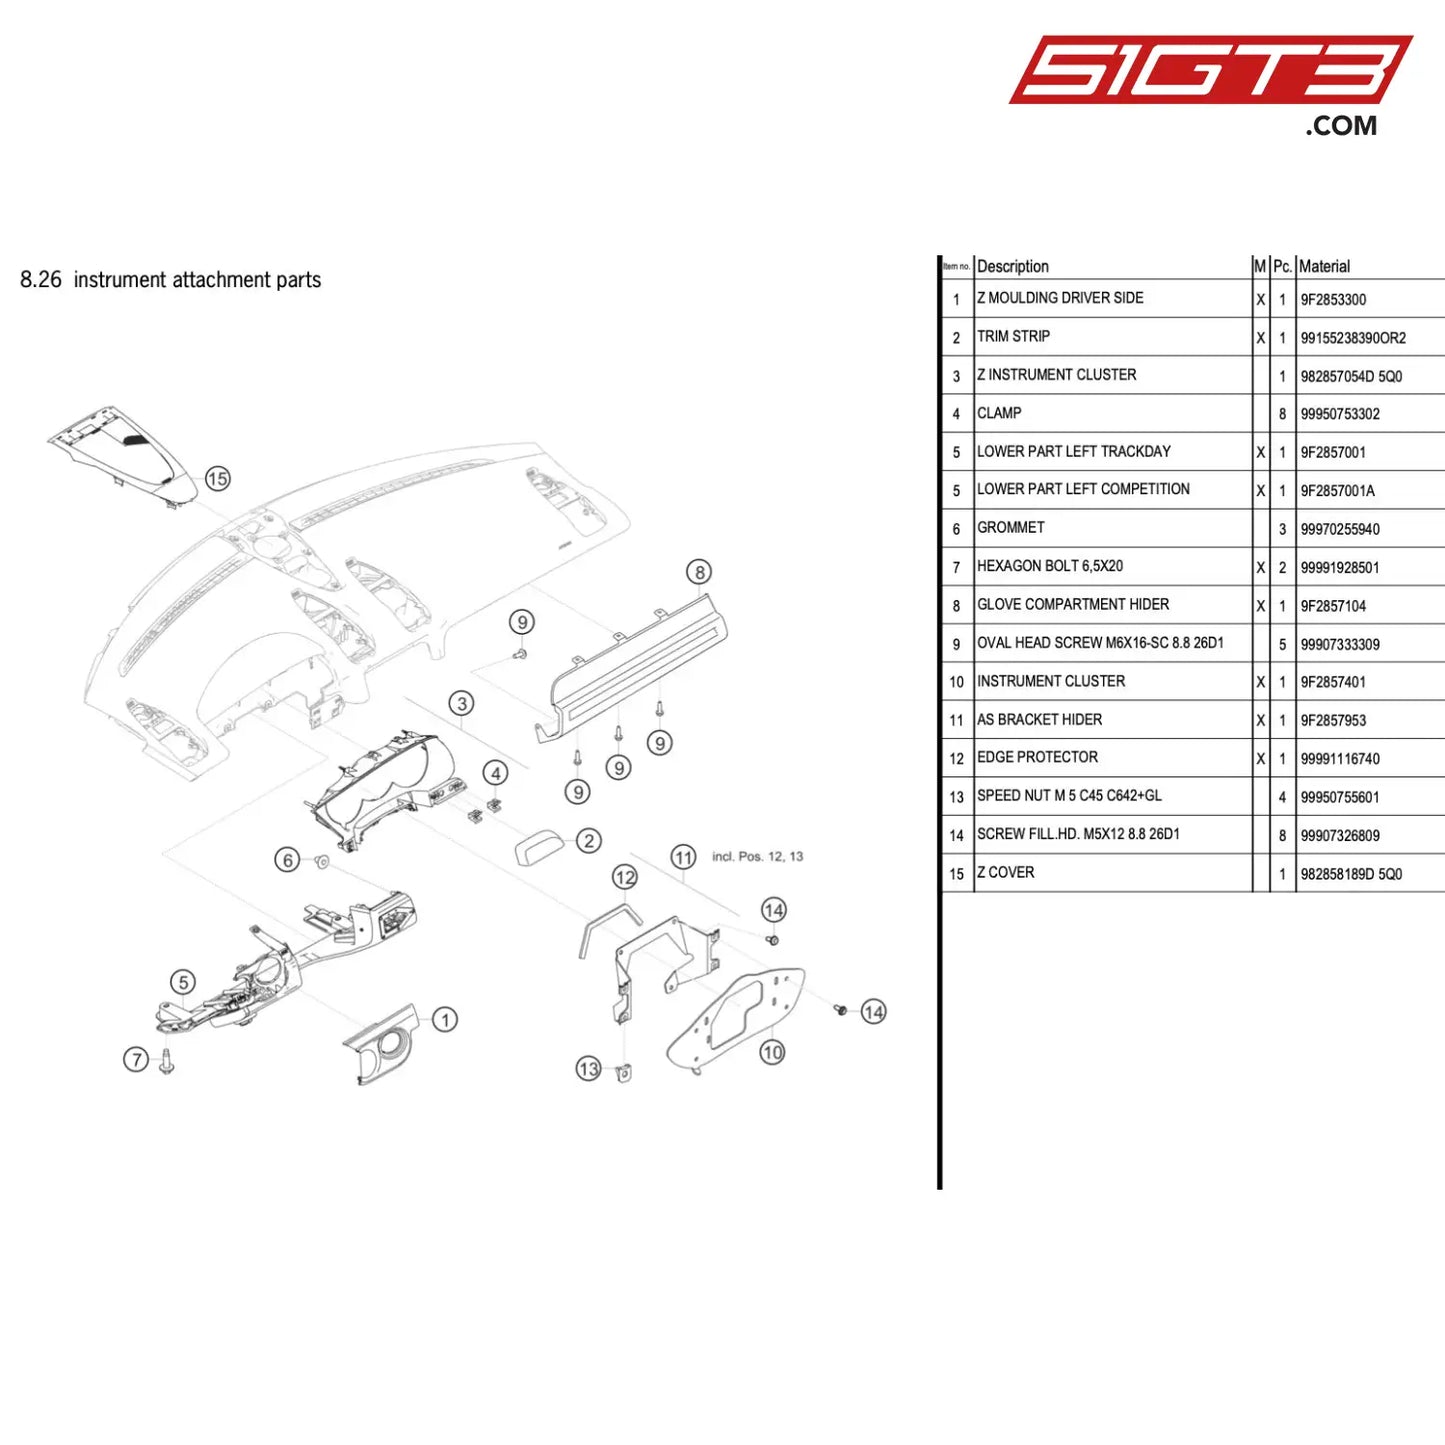 Lower Part Left Competition - 9F2857001A [Porsche 718 Cayman Gt4 Rs Clubsport] Instrument Attachment